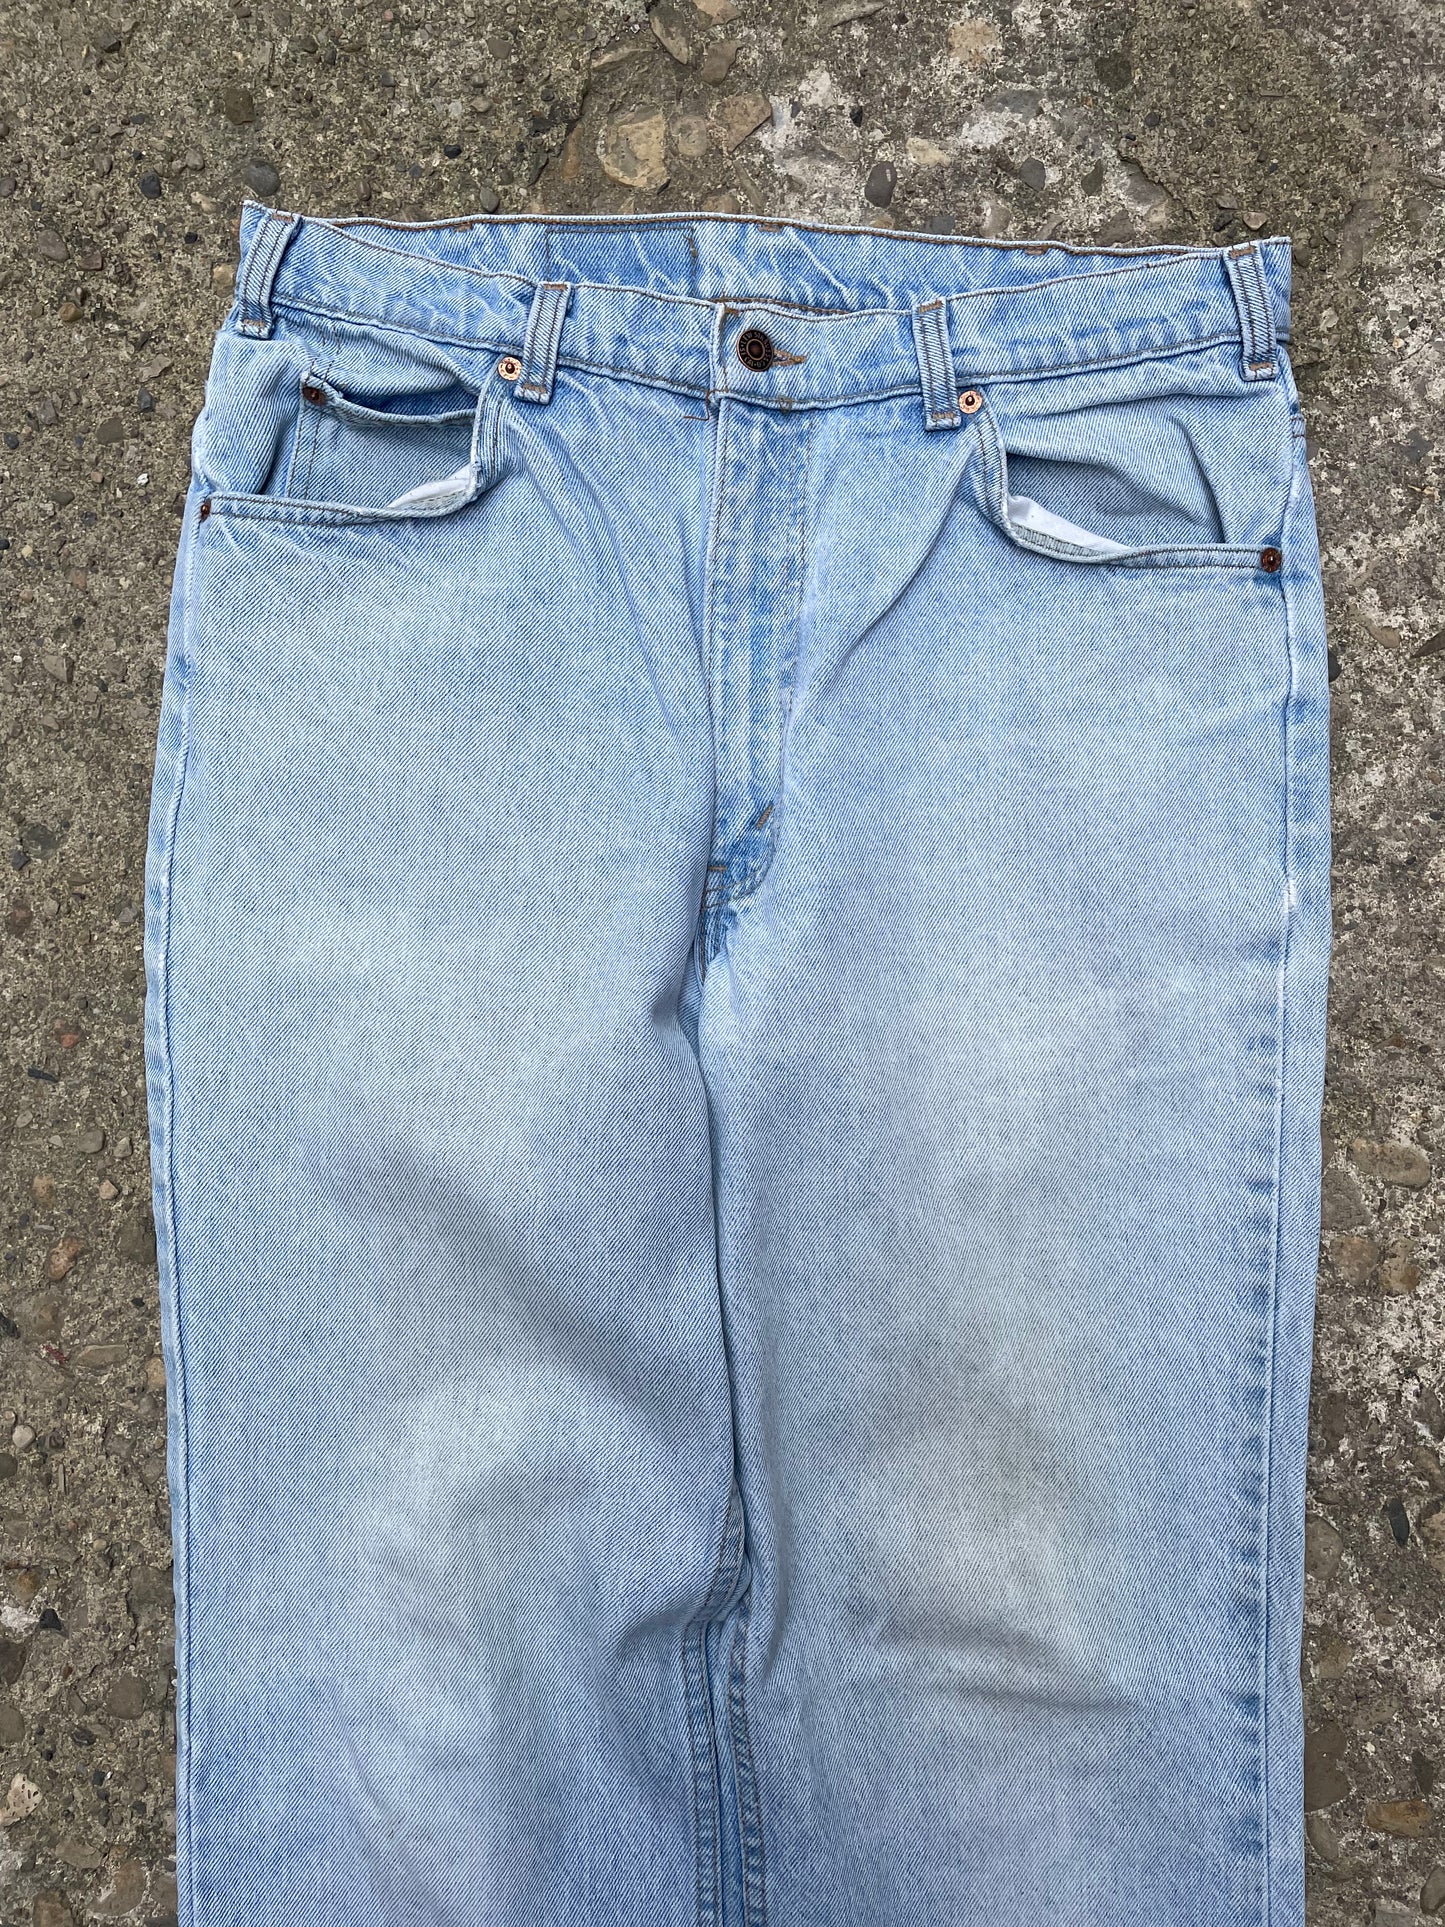 1990's Levi's 619 Orange Tab Light Wash Denim Jeans - 34